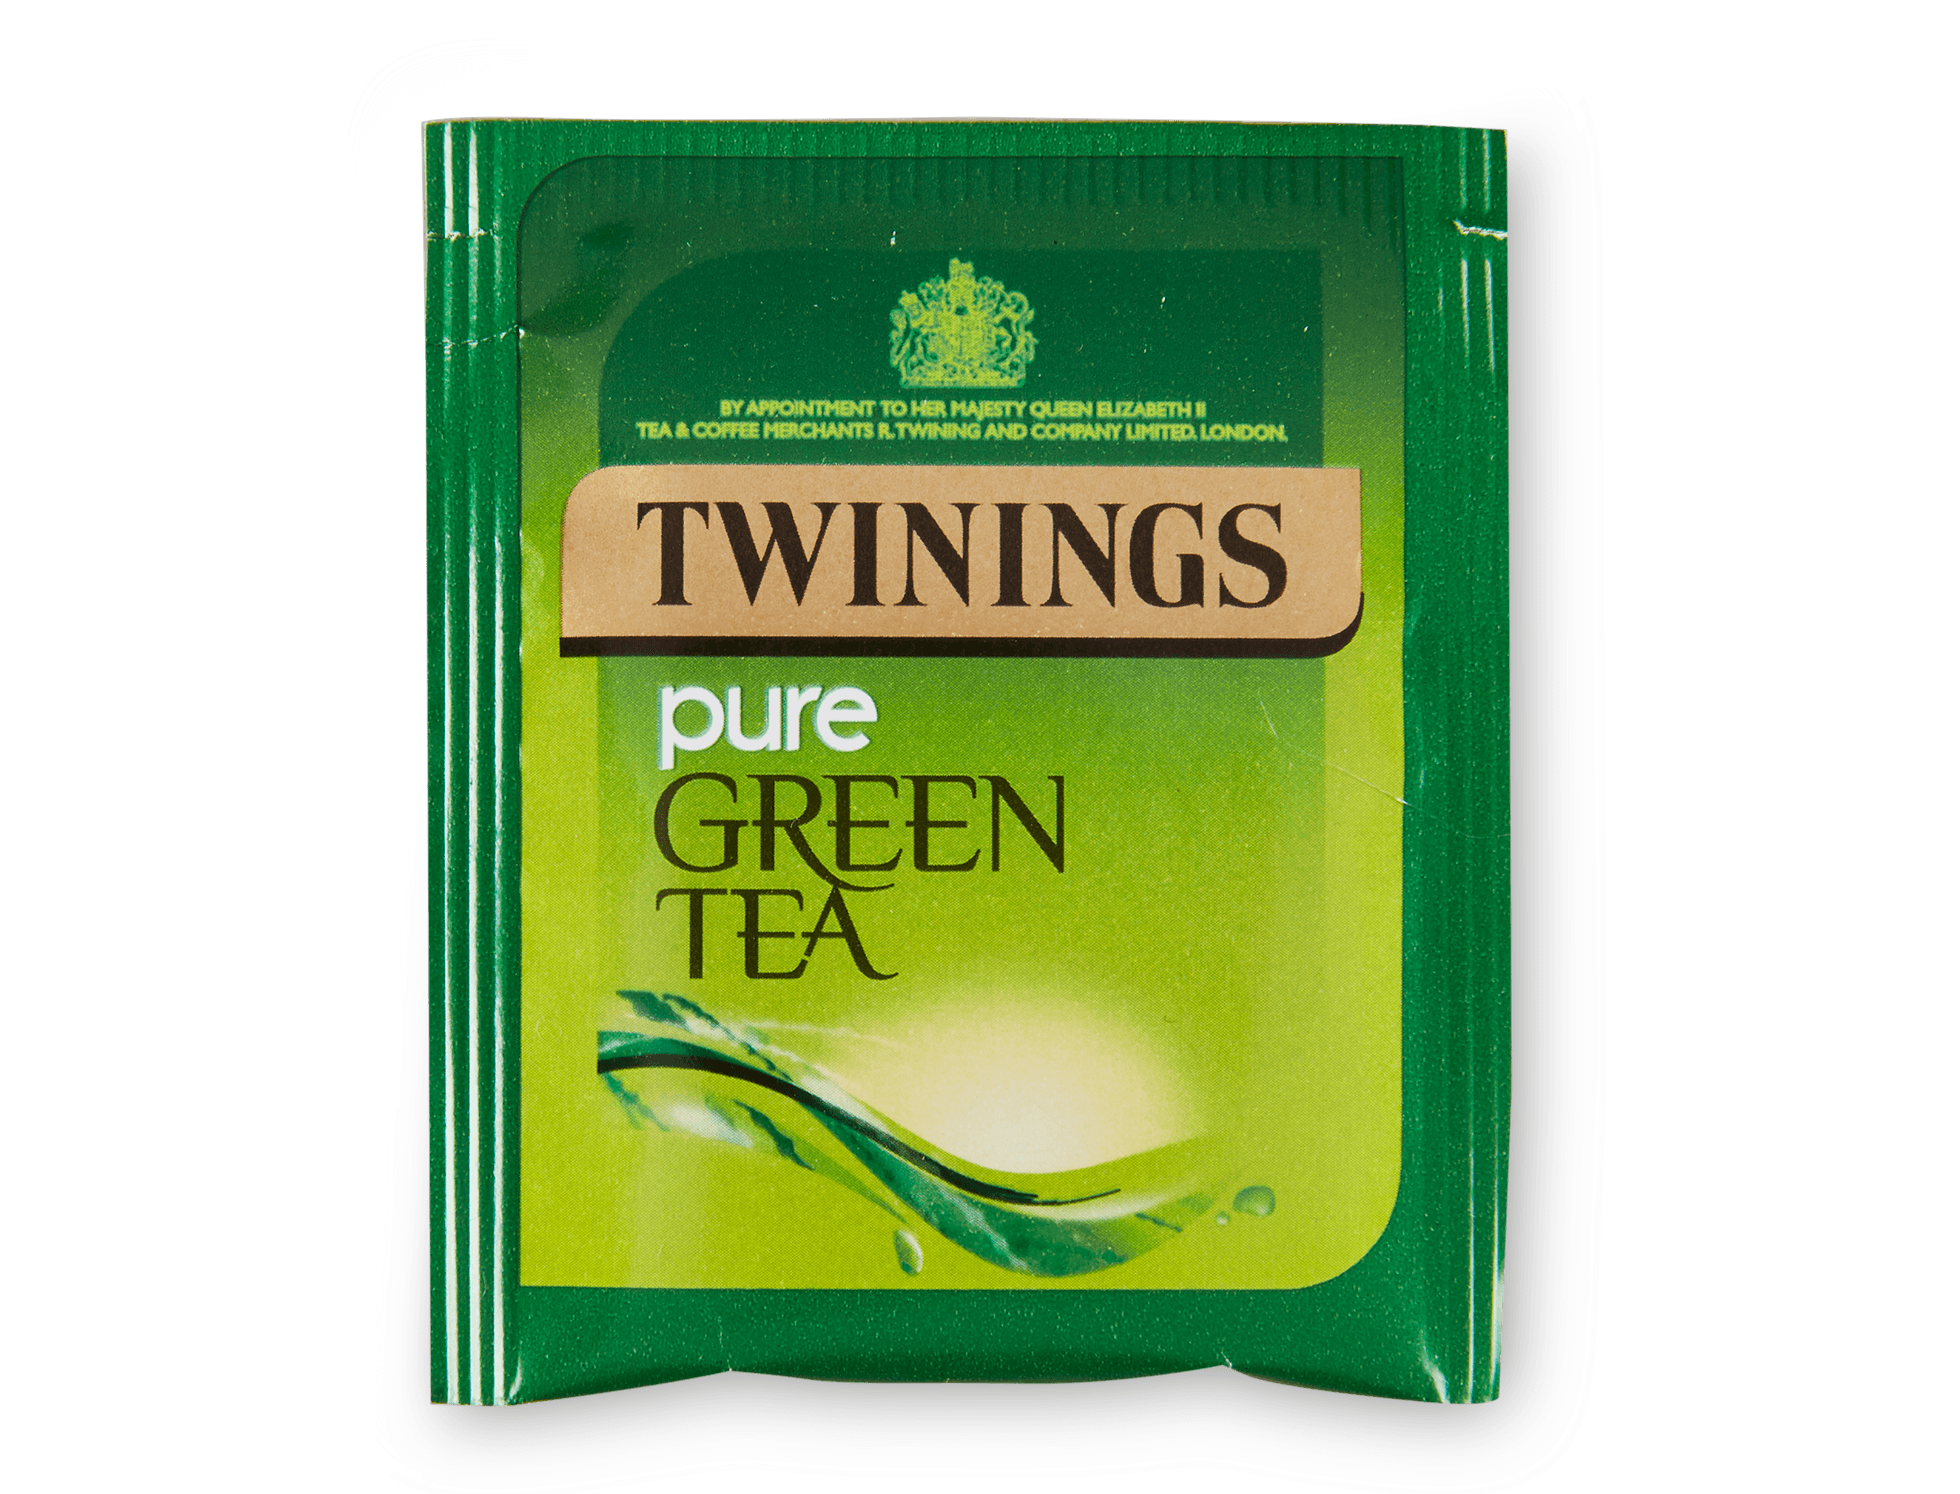 Twinings Tea: Pure Green Envelope Tea Bags - 20 Bags - Vending Superstore